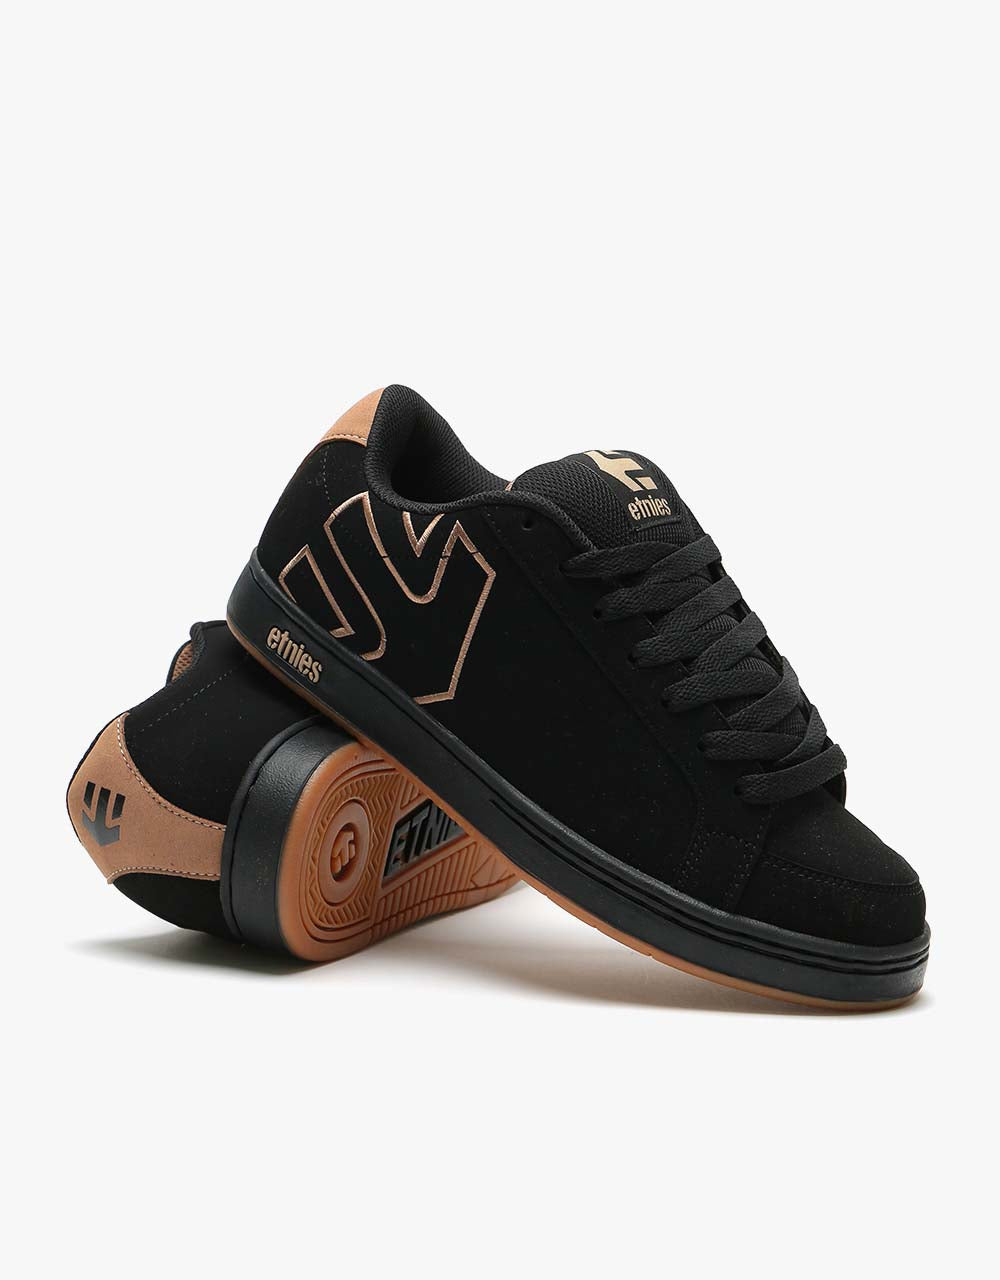 Etnies Kingpin 2 Skate Shoes - Black/Tan